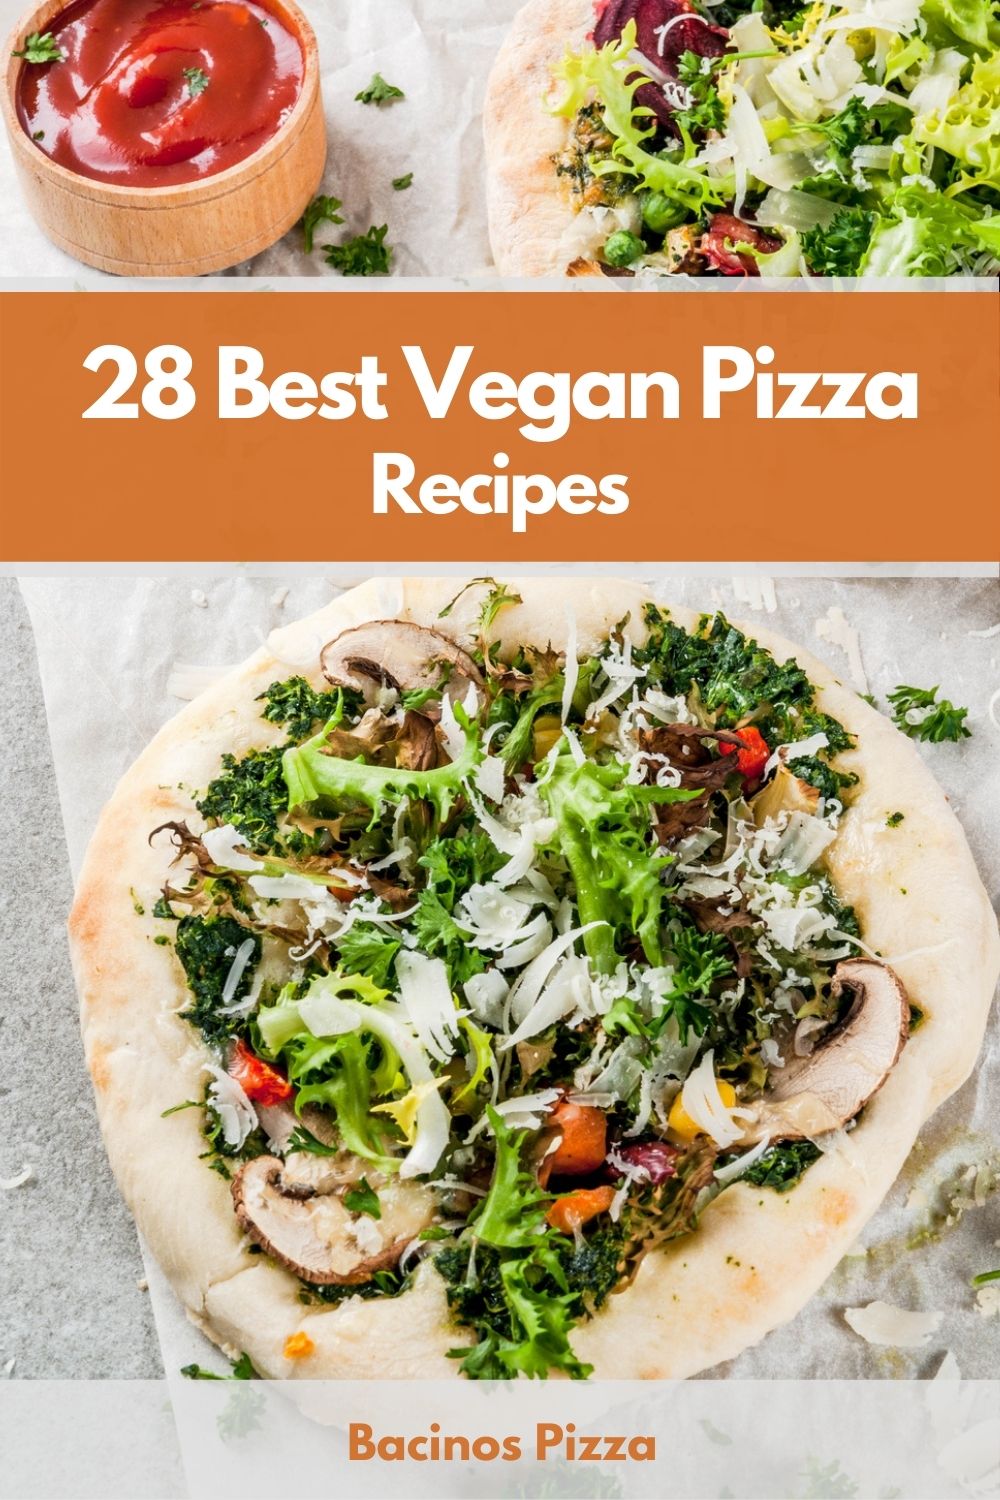 28 Best Vegan Pizza Recipes pin